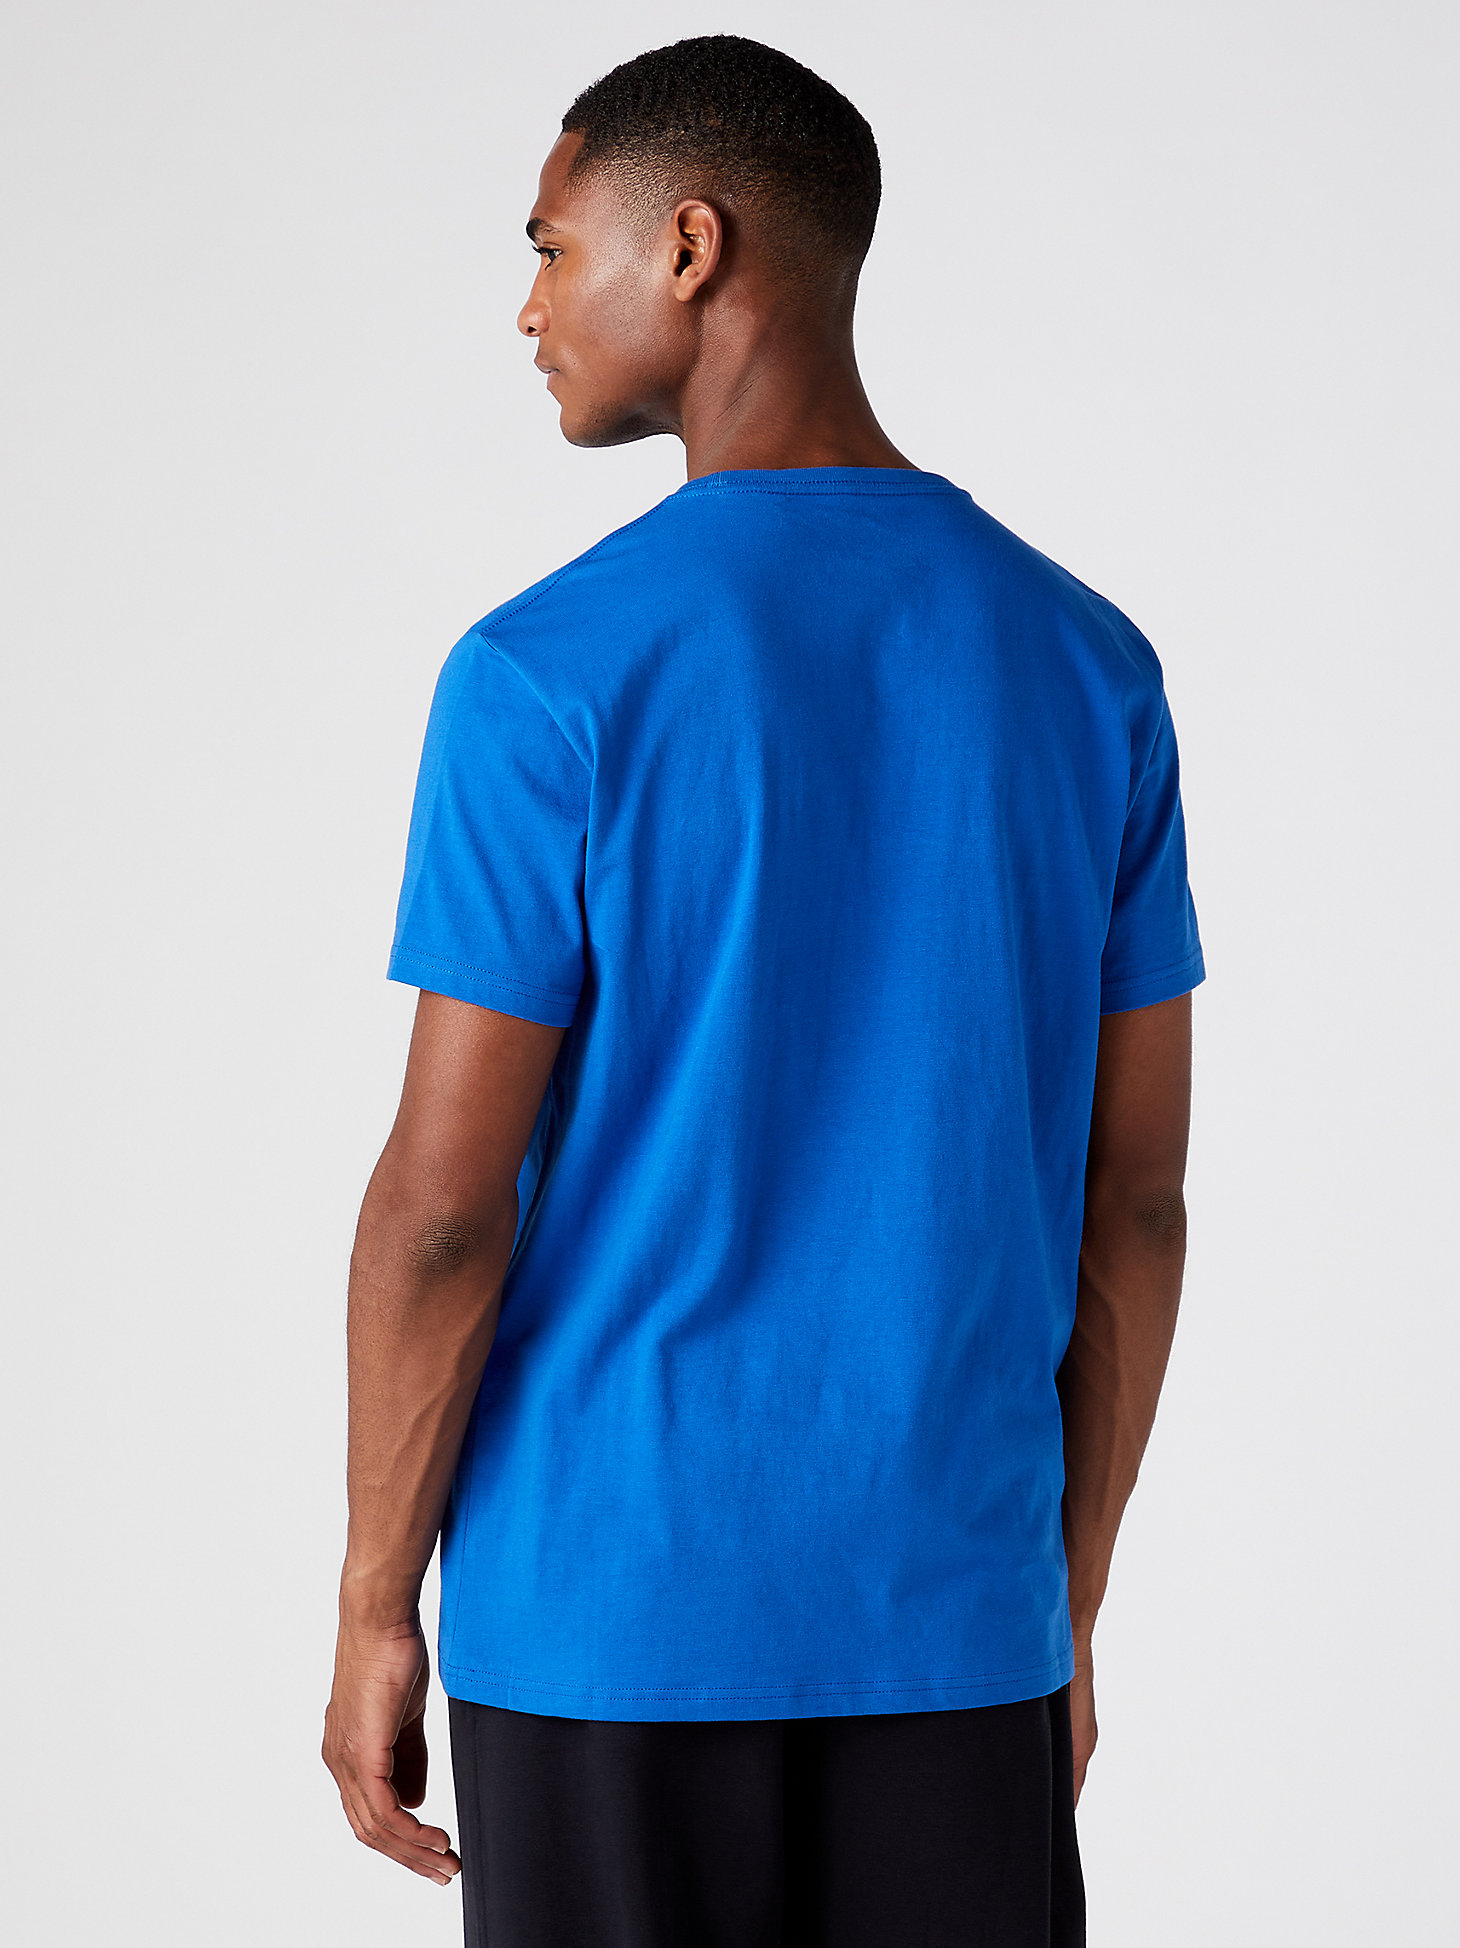 75th Anniversary Men's T-shirt in Blue Lolite alternative view 1